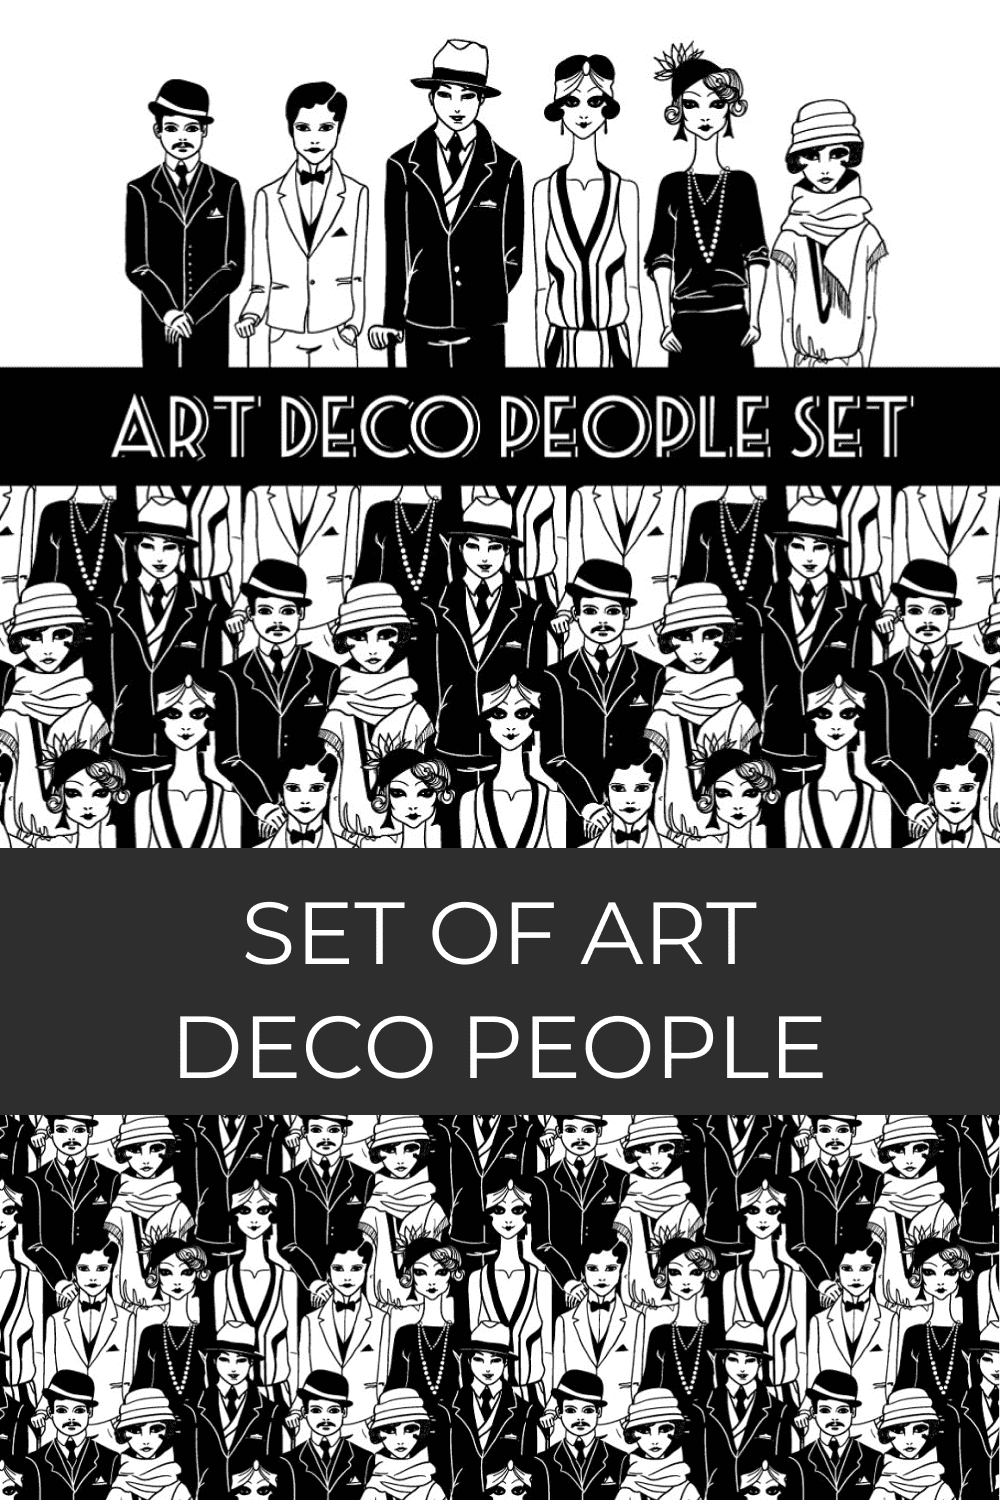 set of art deco people pinterest image.